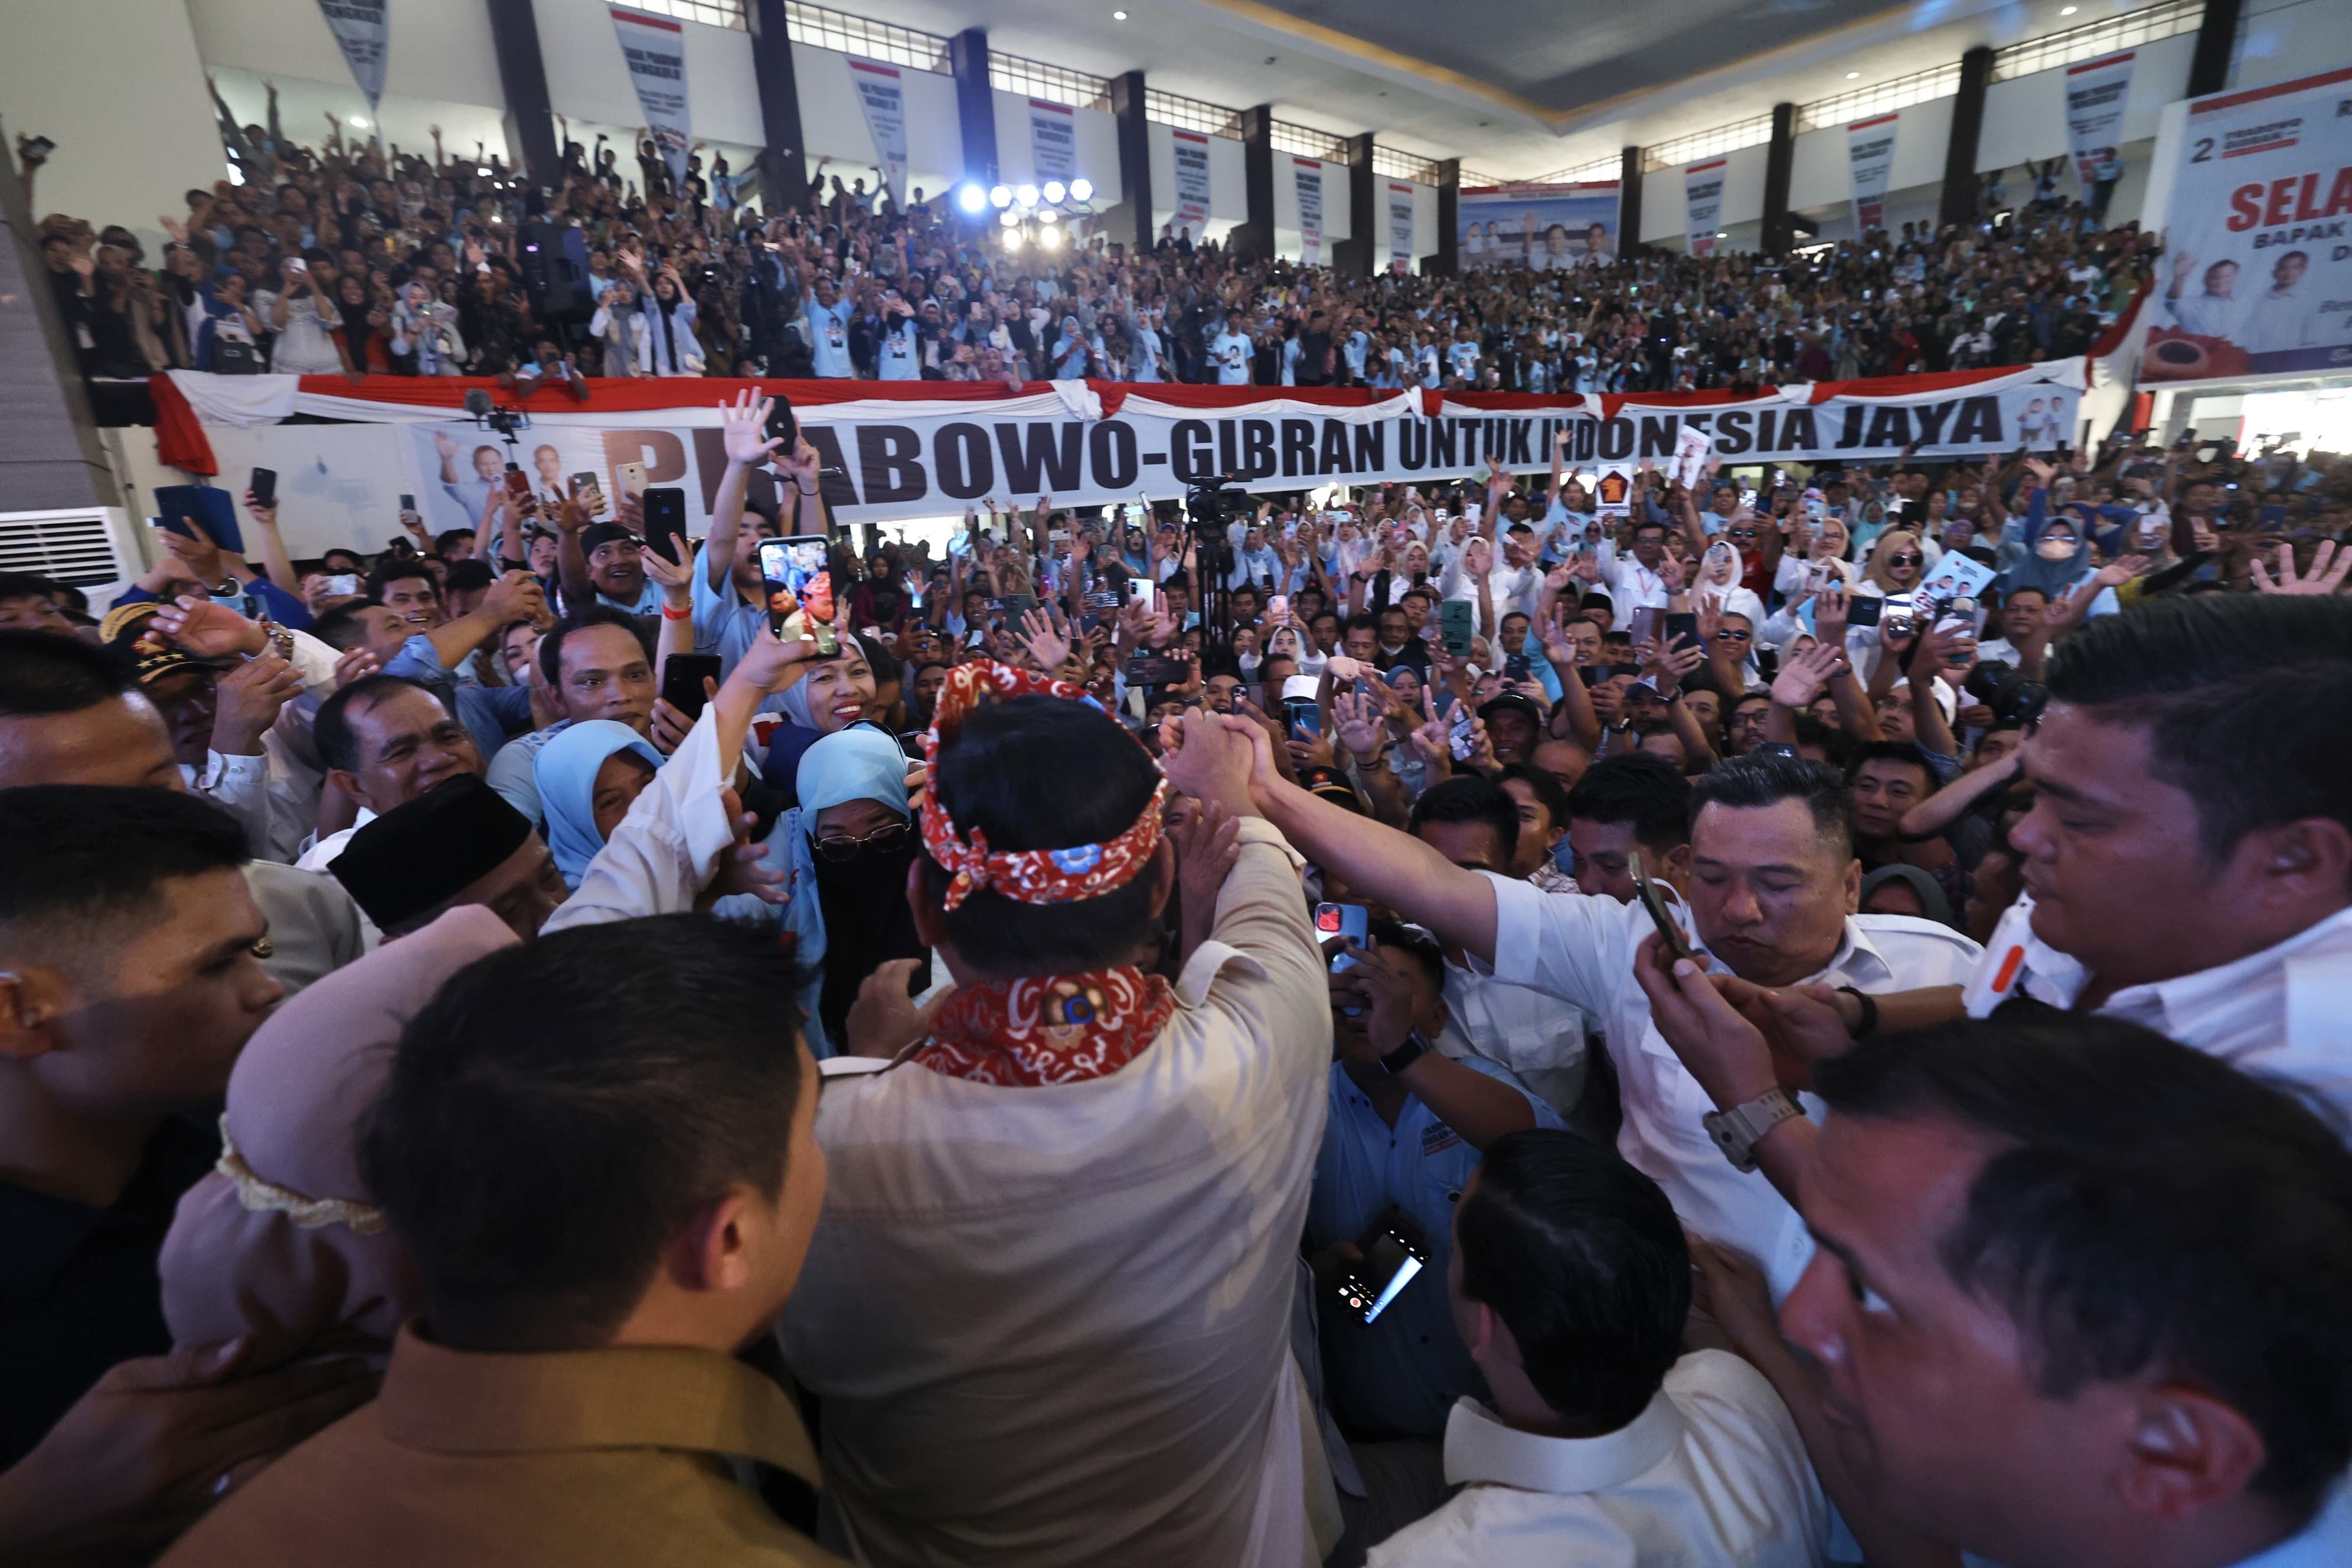 Kampanye Prabowo di Bangka Belitung (Sinpo.id/Tim Media)